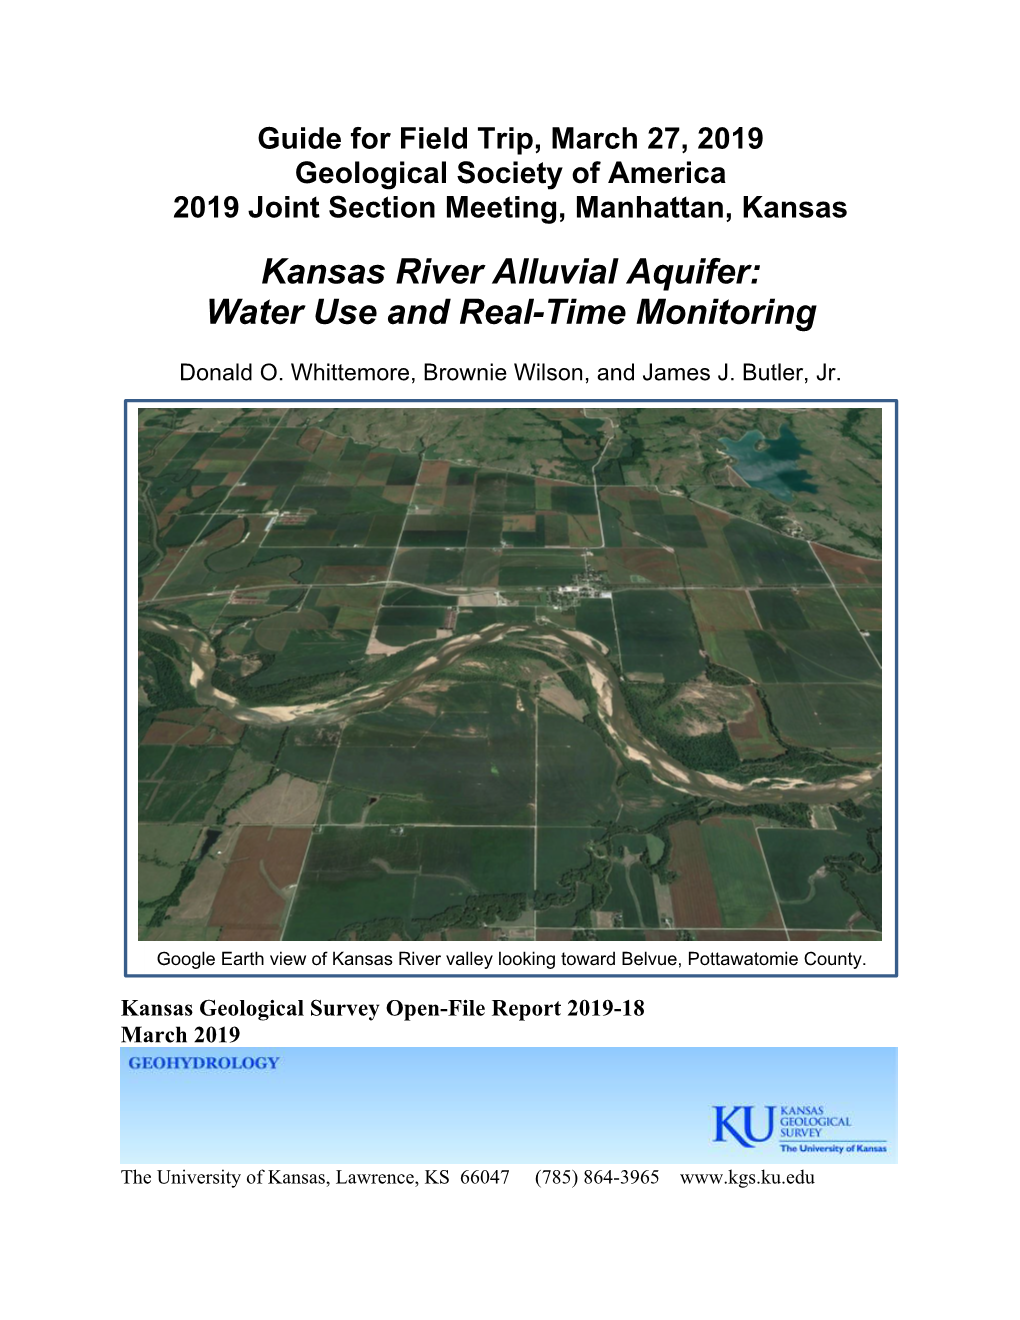 Kansas River Alluvial Aquifer: Water Use and Real-Time Monitoring